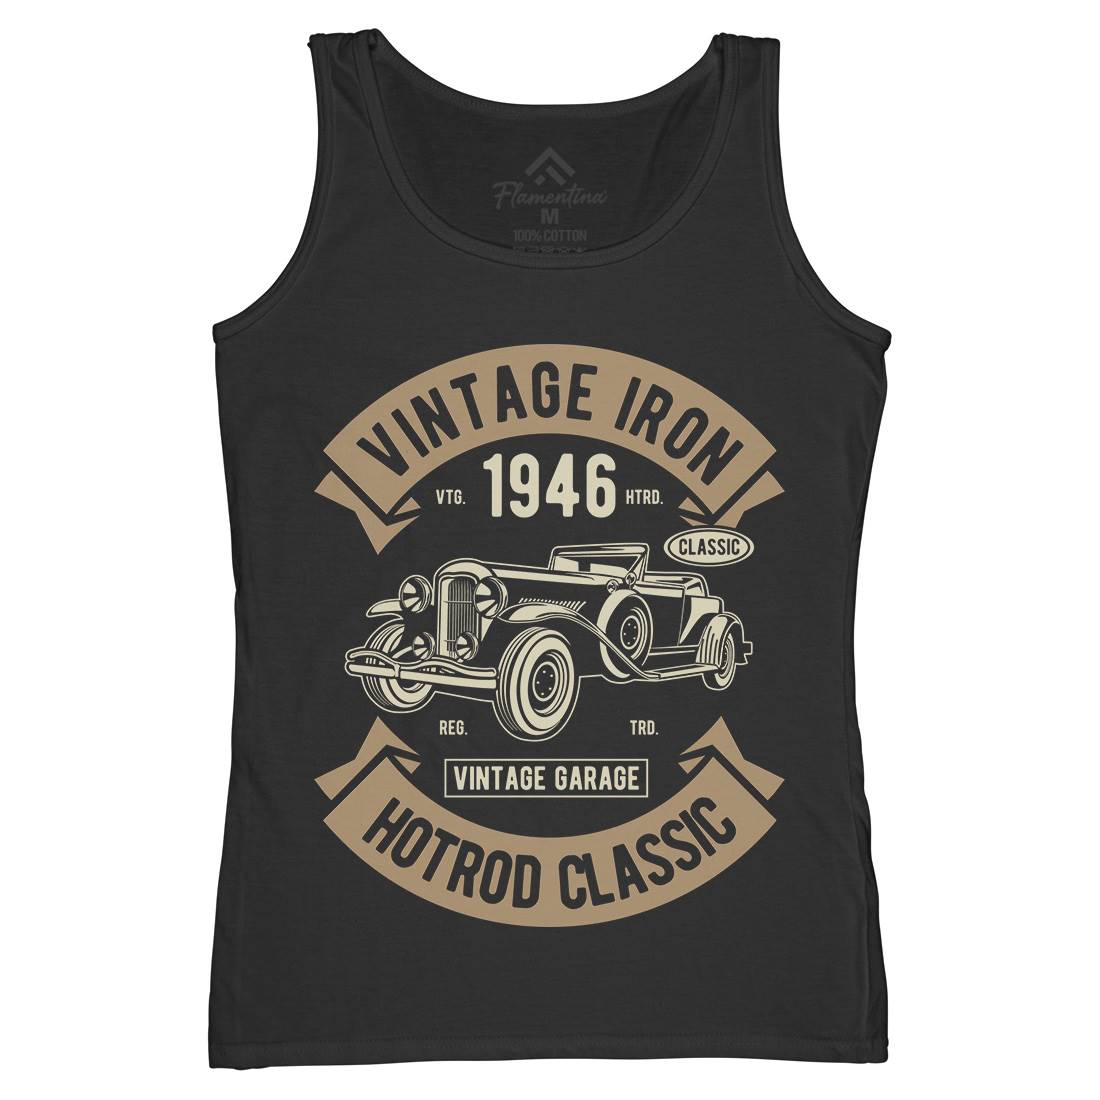 Vintage Iron Classic Womens Organic Tank Top Vest Cars D595